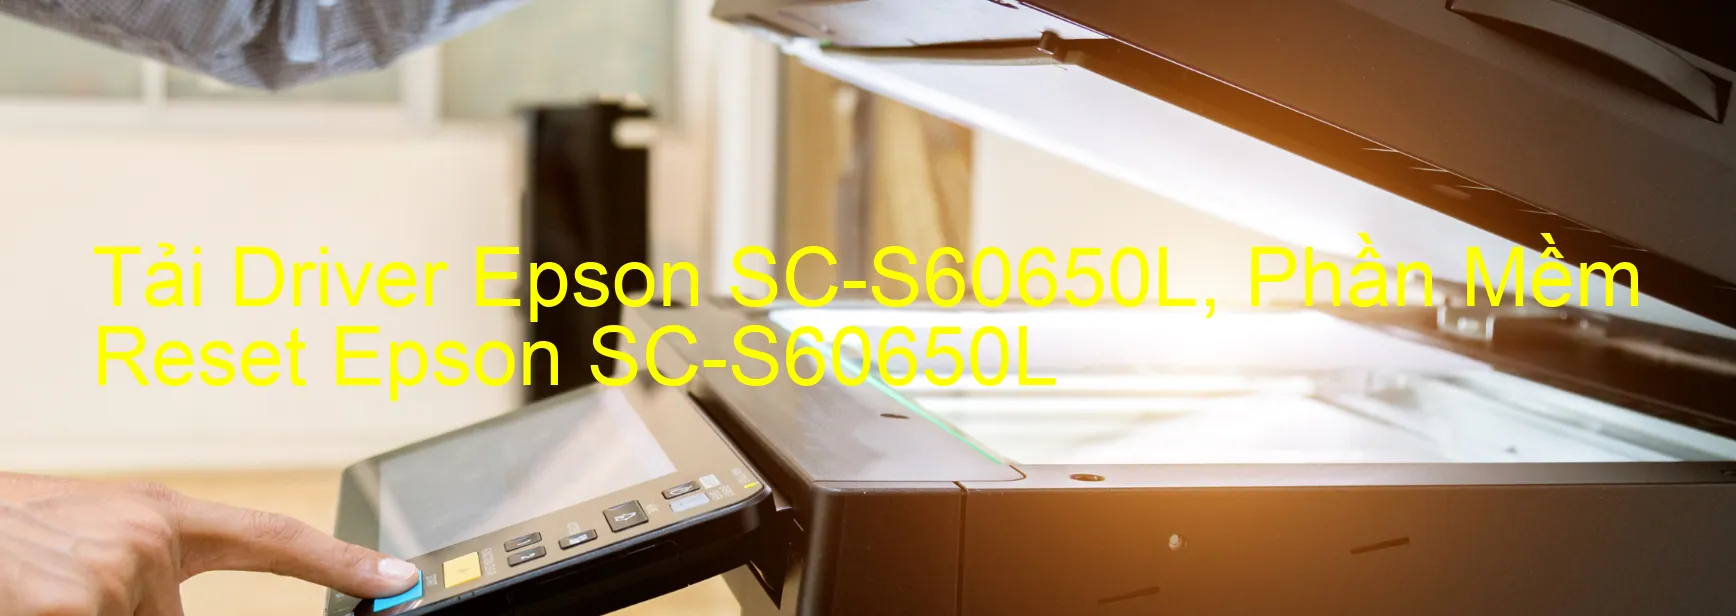 Driver Epson SC-S60650L, Phần Mềm Reset Epson SC-S60650L